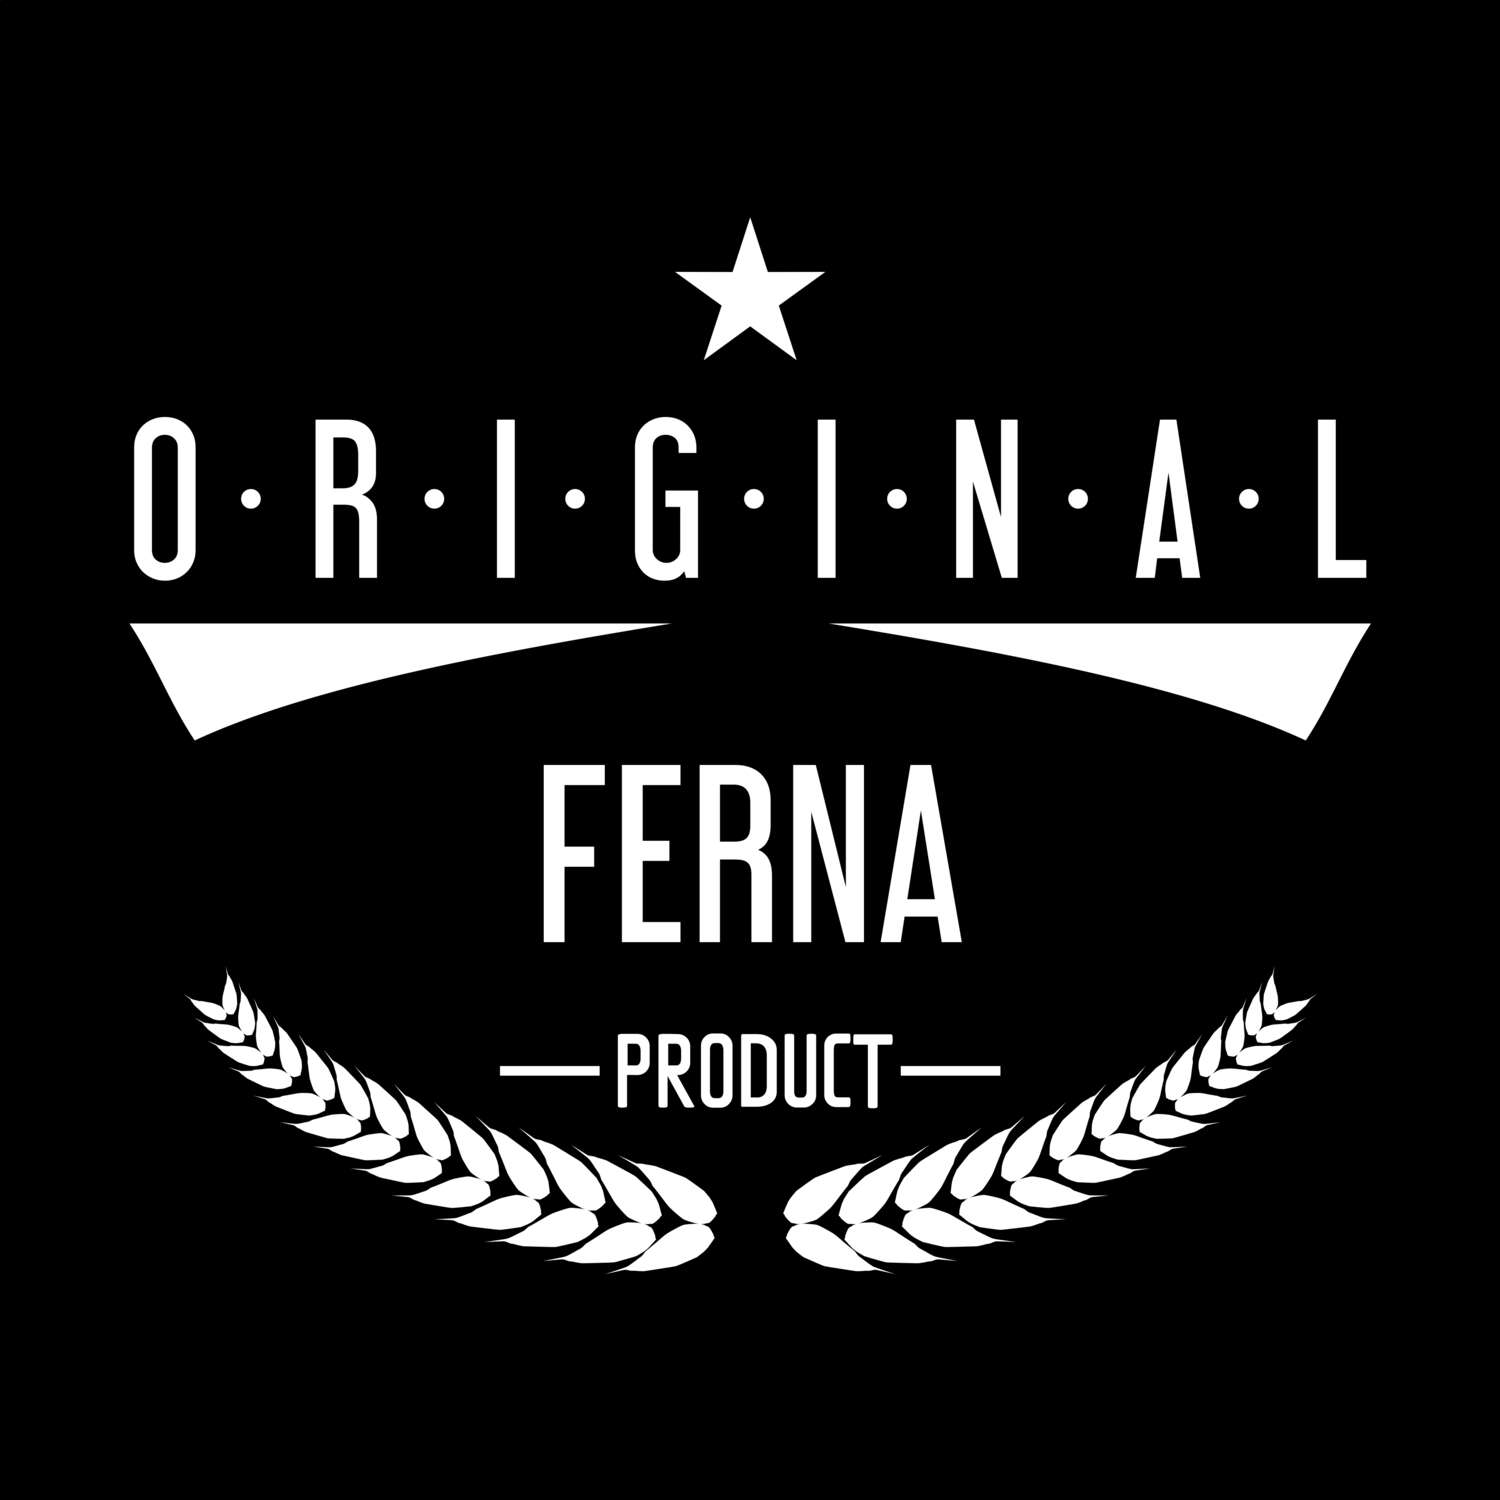 Ferna T-Shirt »Original Product«